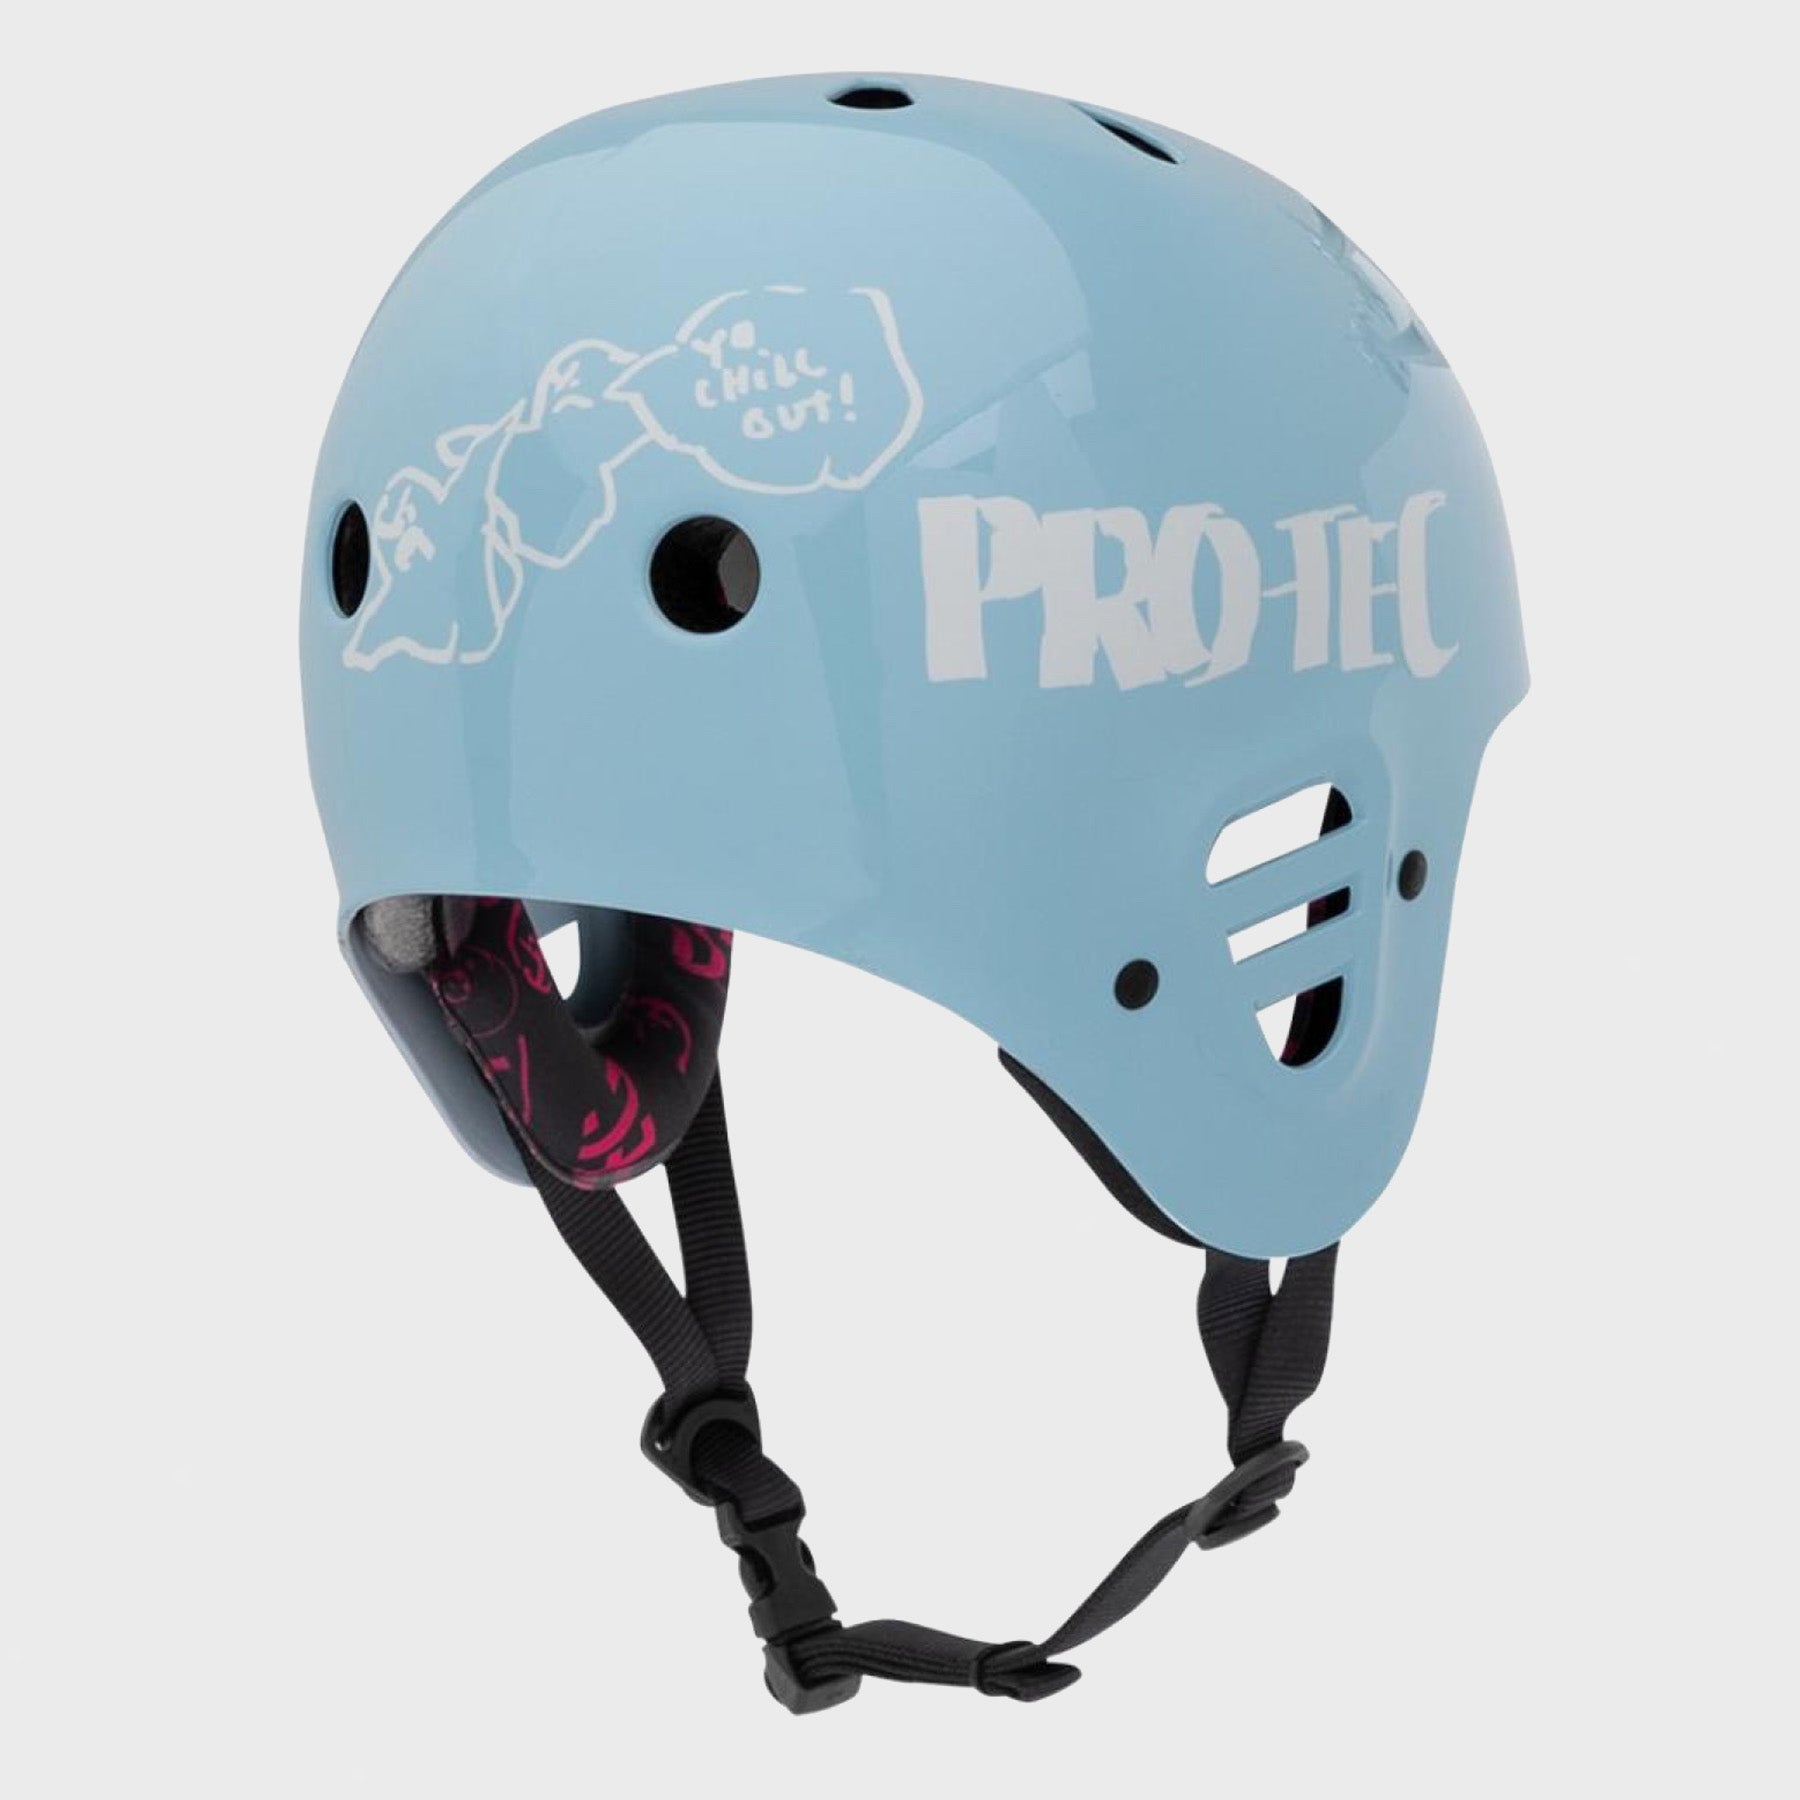 Pro-Tec - Full Cut Cert Gonz 2 Helmet - Large - Light Blue